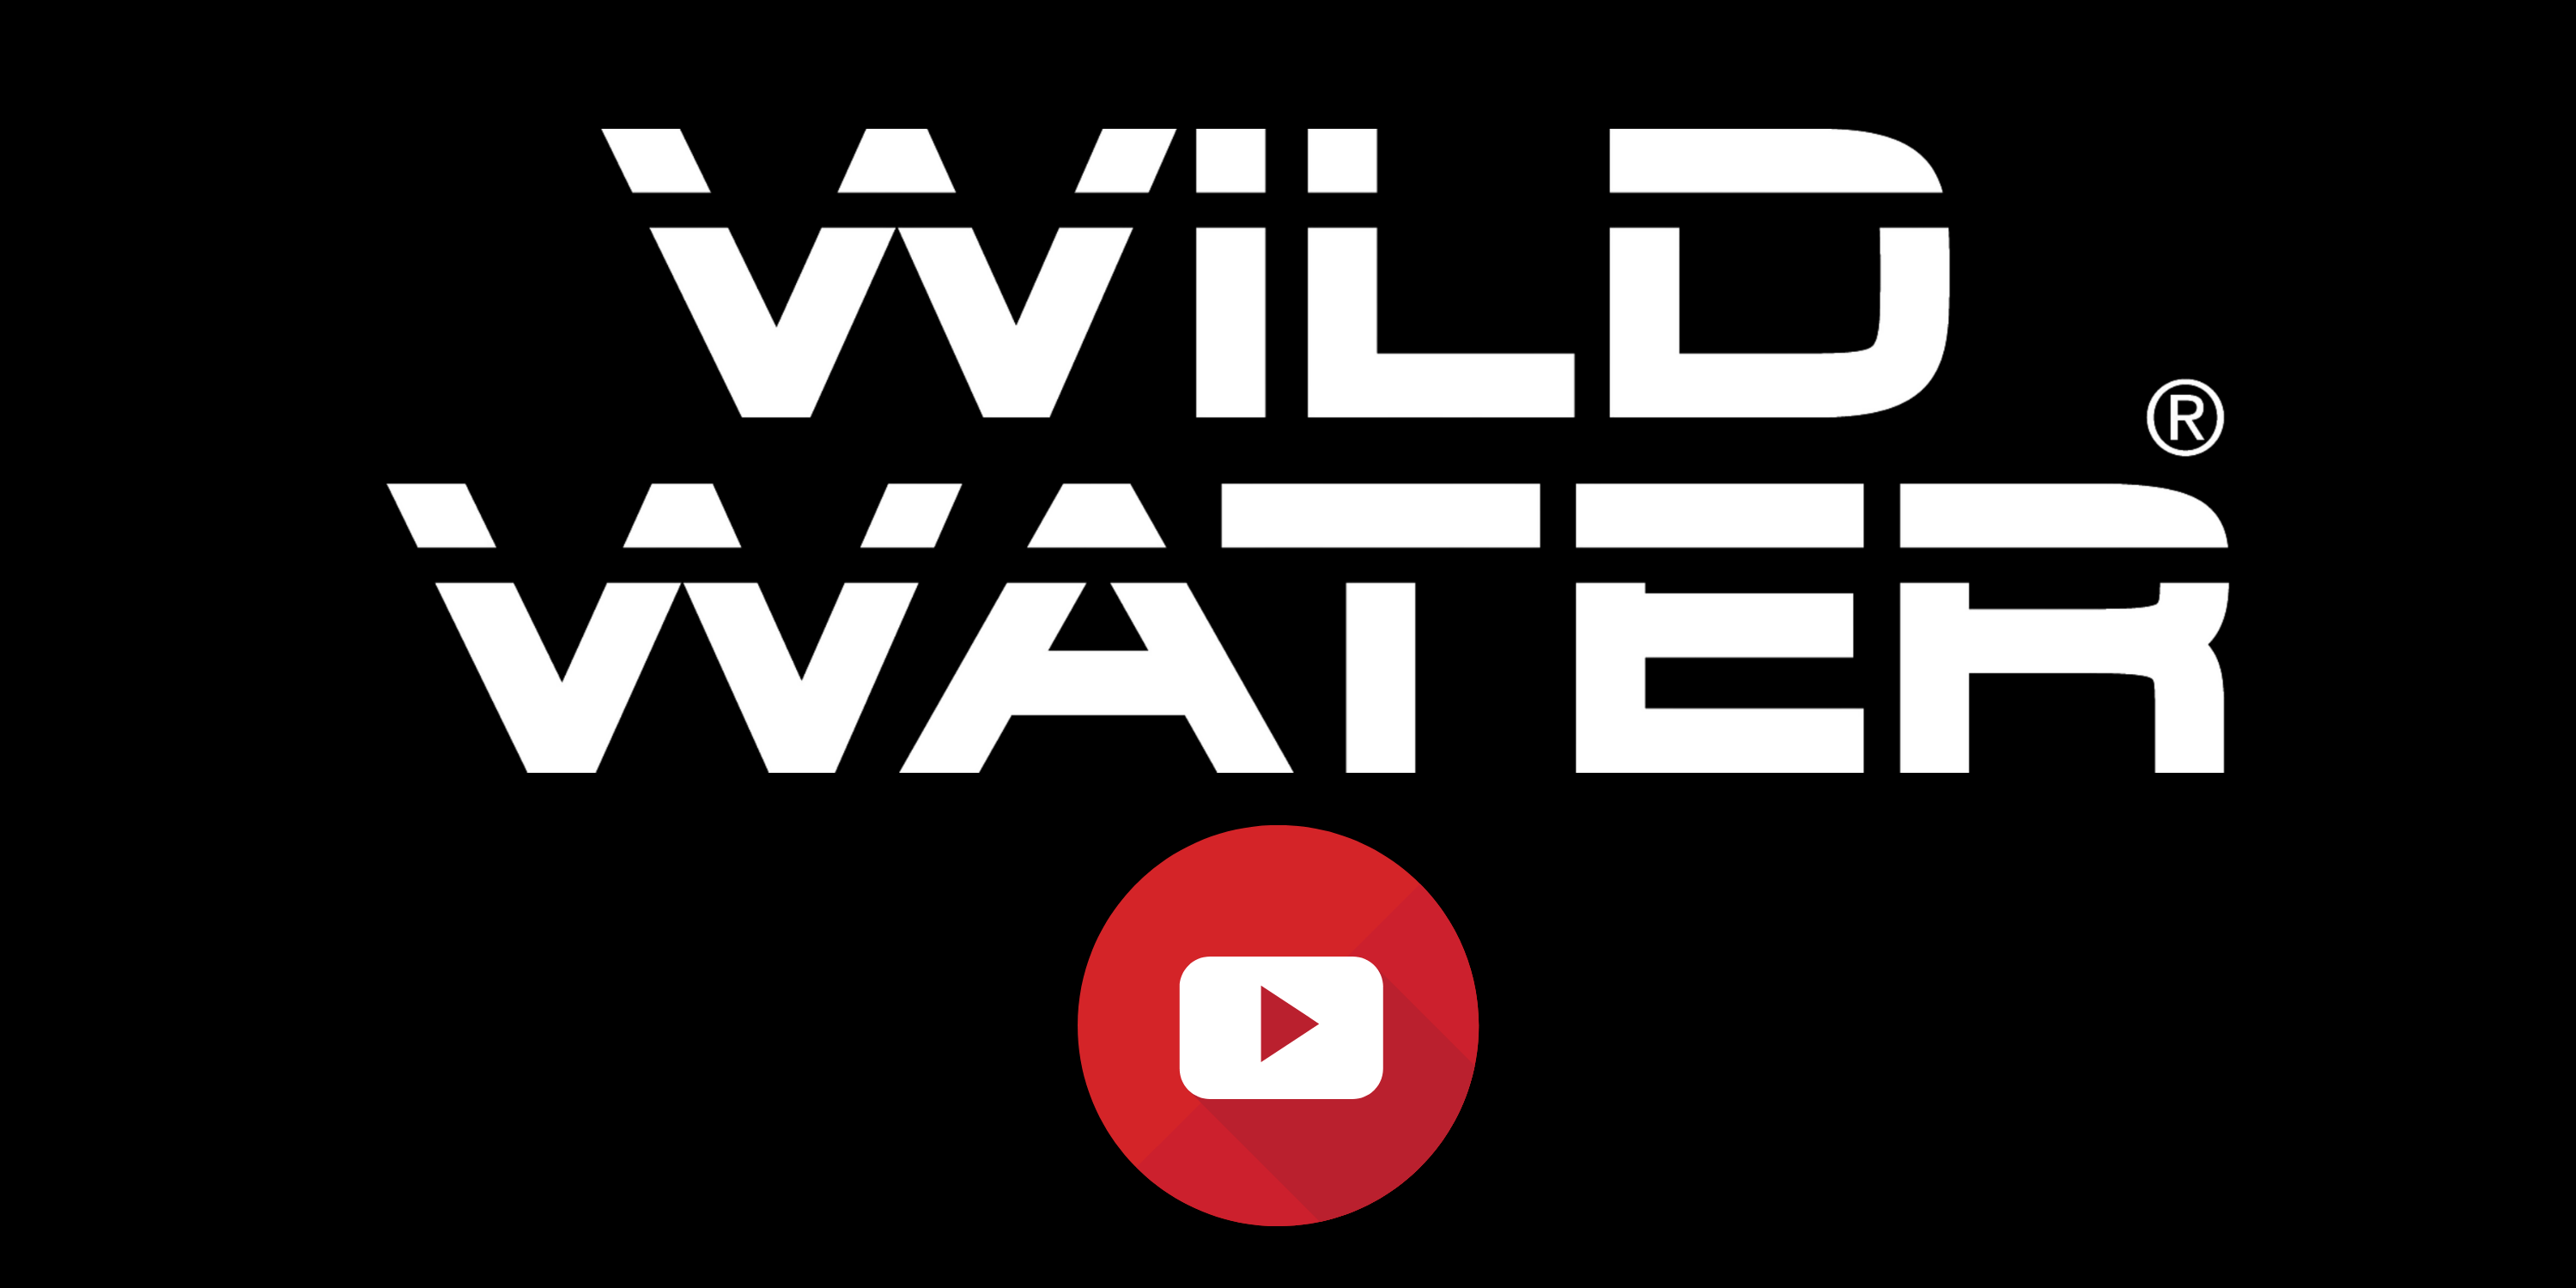 Wild Water Deluxe Fly Fishing Kit, 9 ft 3/4 wt Rod